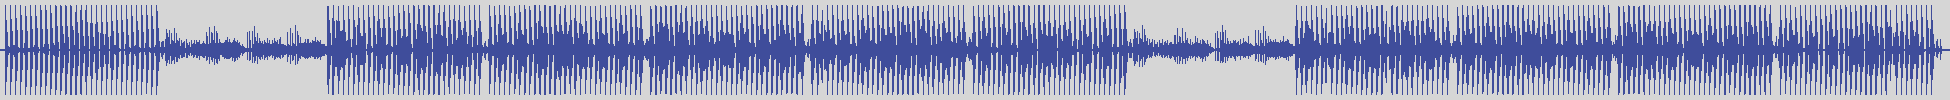 nf_boyz_records [NFY059] Santos Devana - Was Left [Original Mix] audio wave form